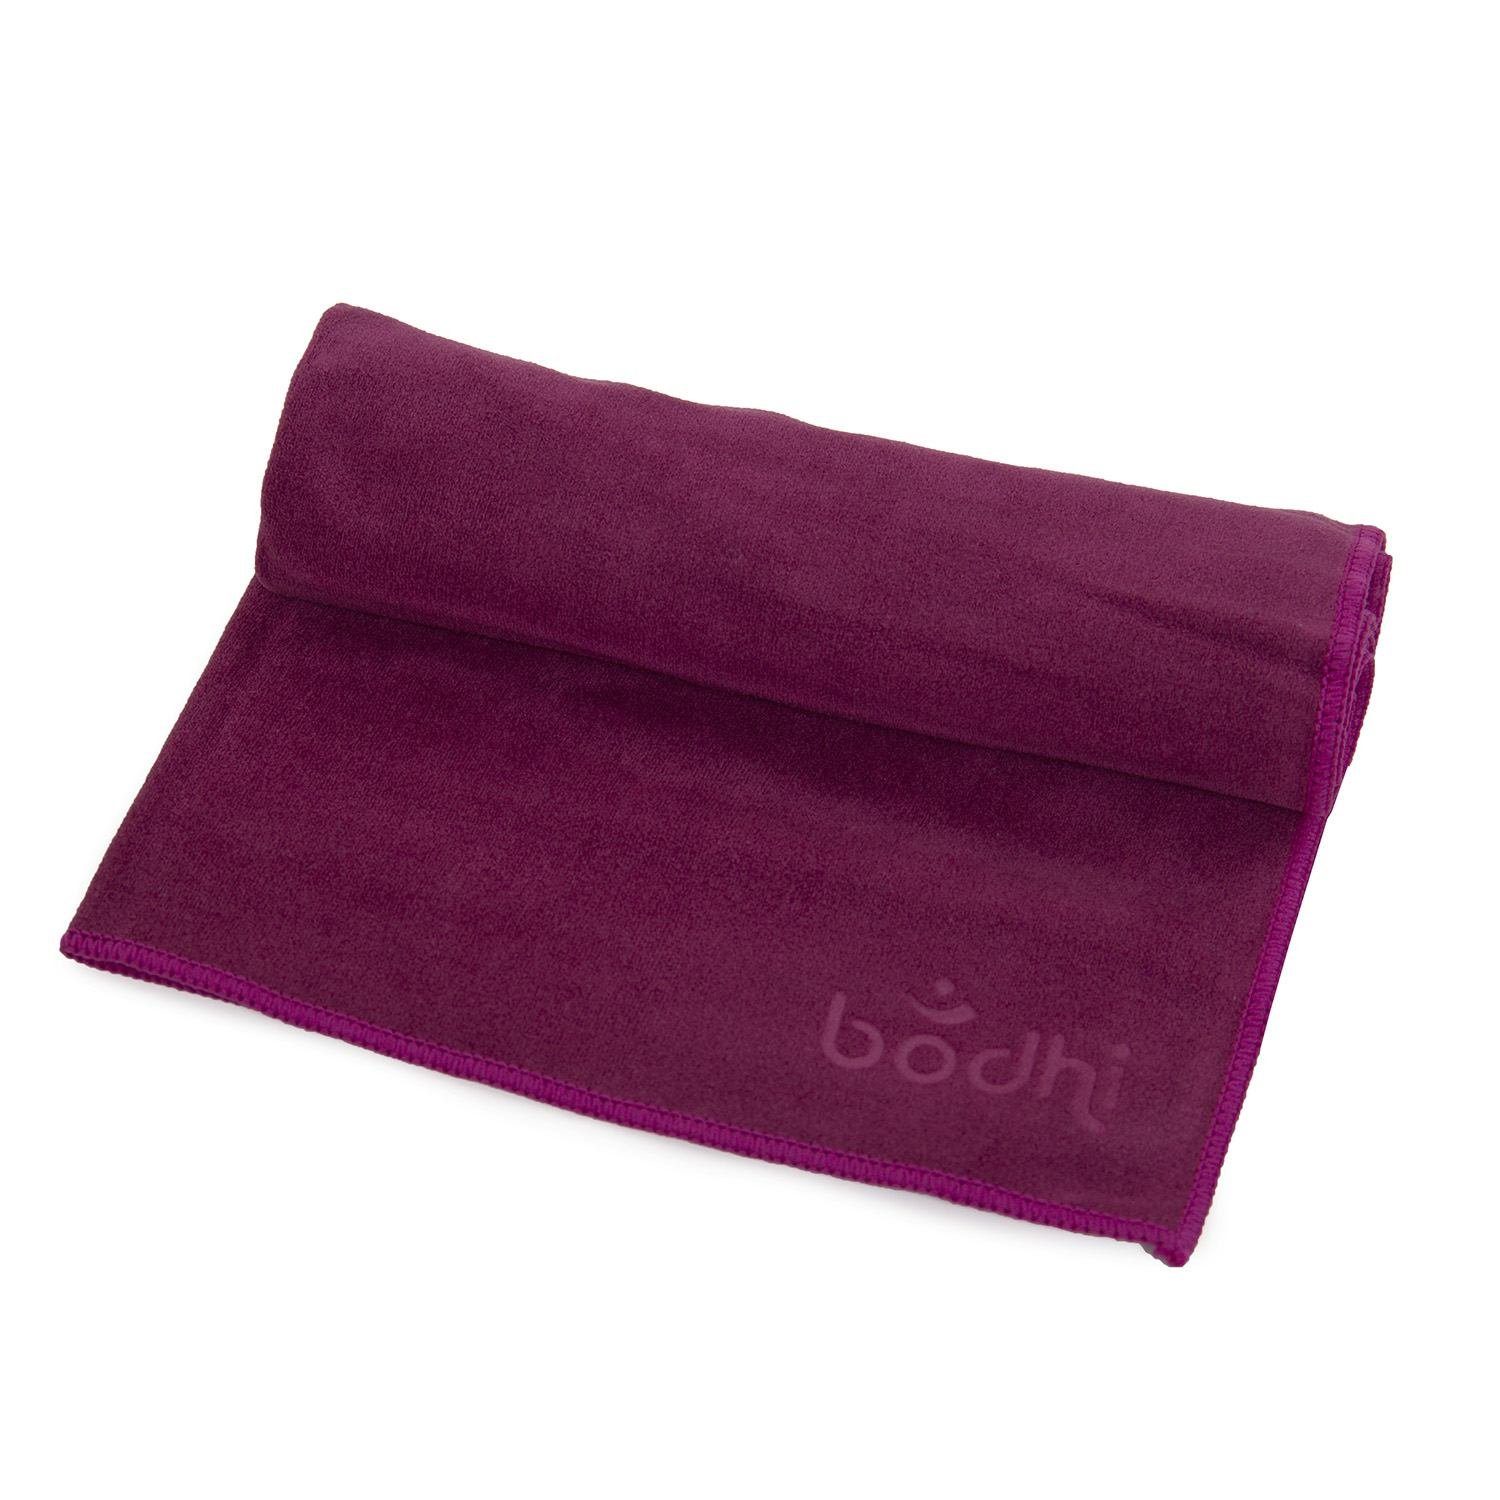 S Handtuch Towel Flow bodhi aubergine Sporthandtuch Yoga